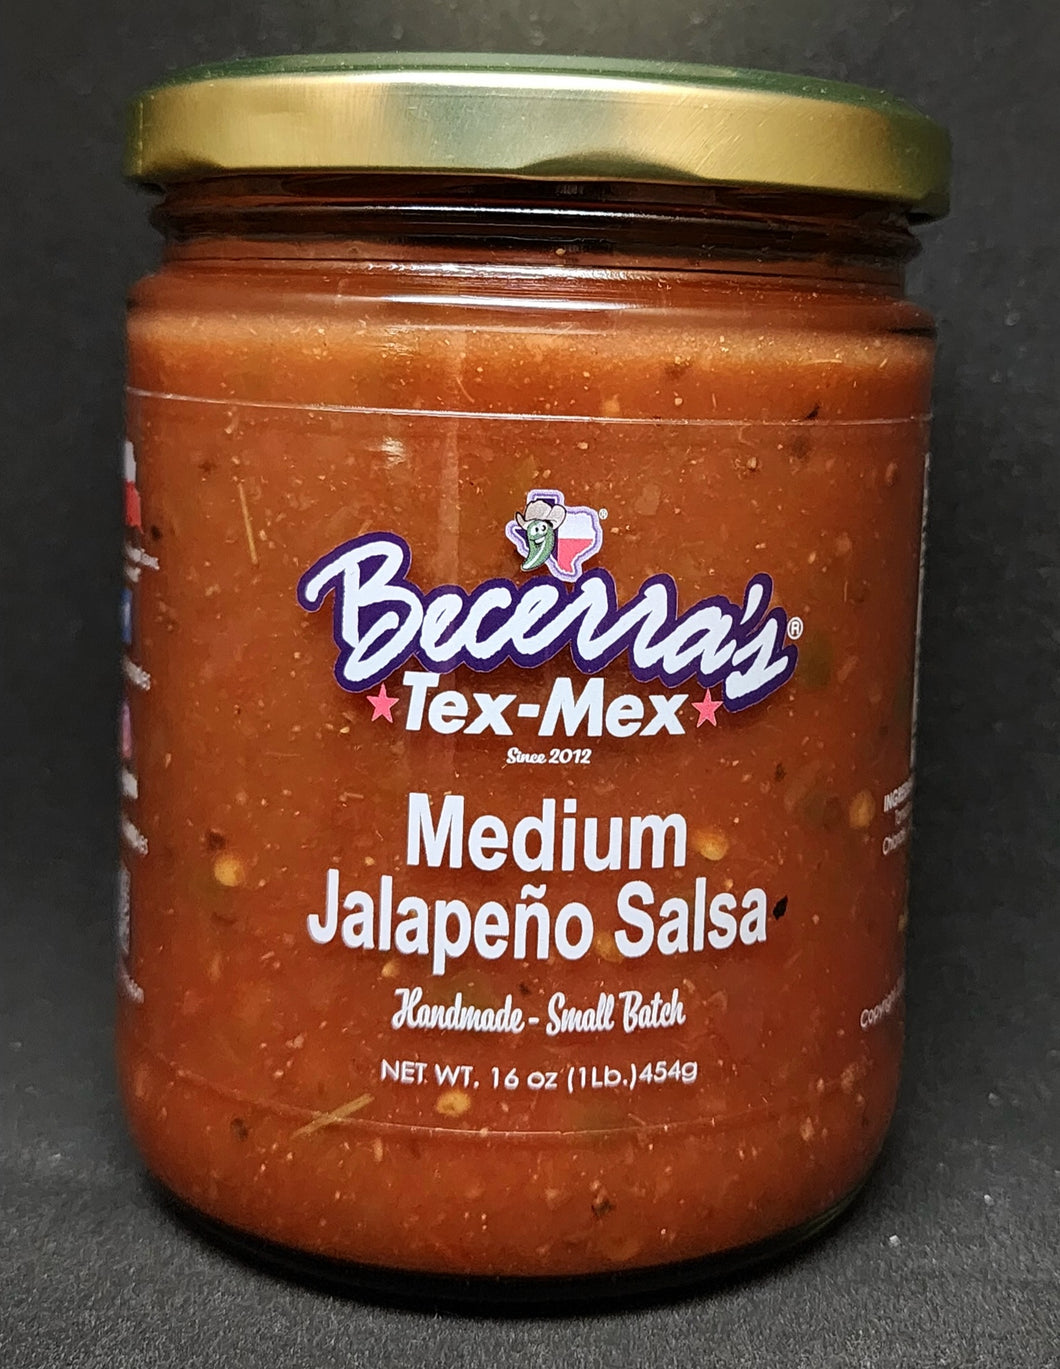 Medium Jalapeno Salsa